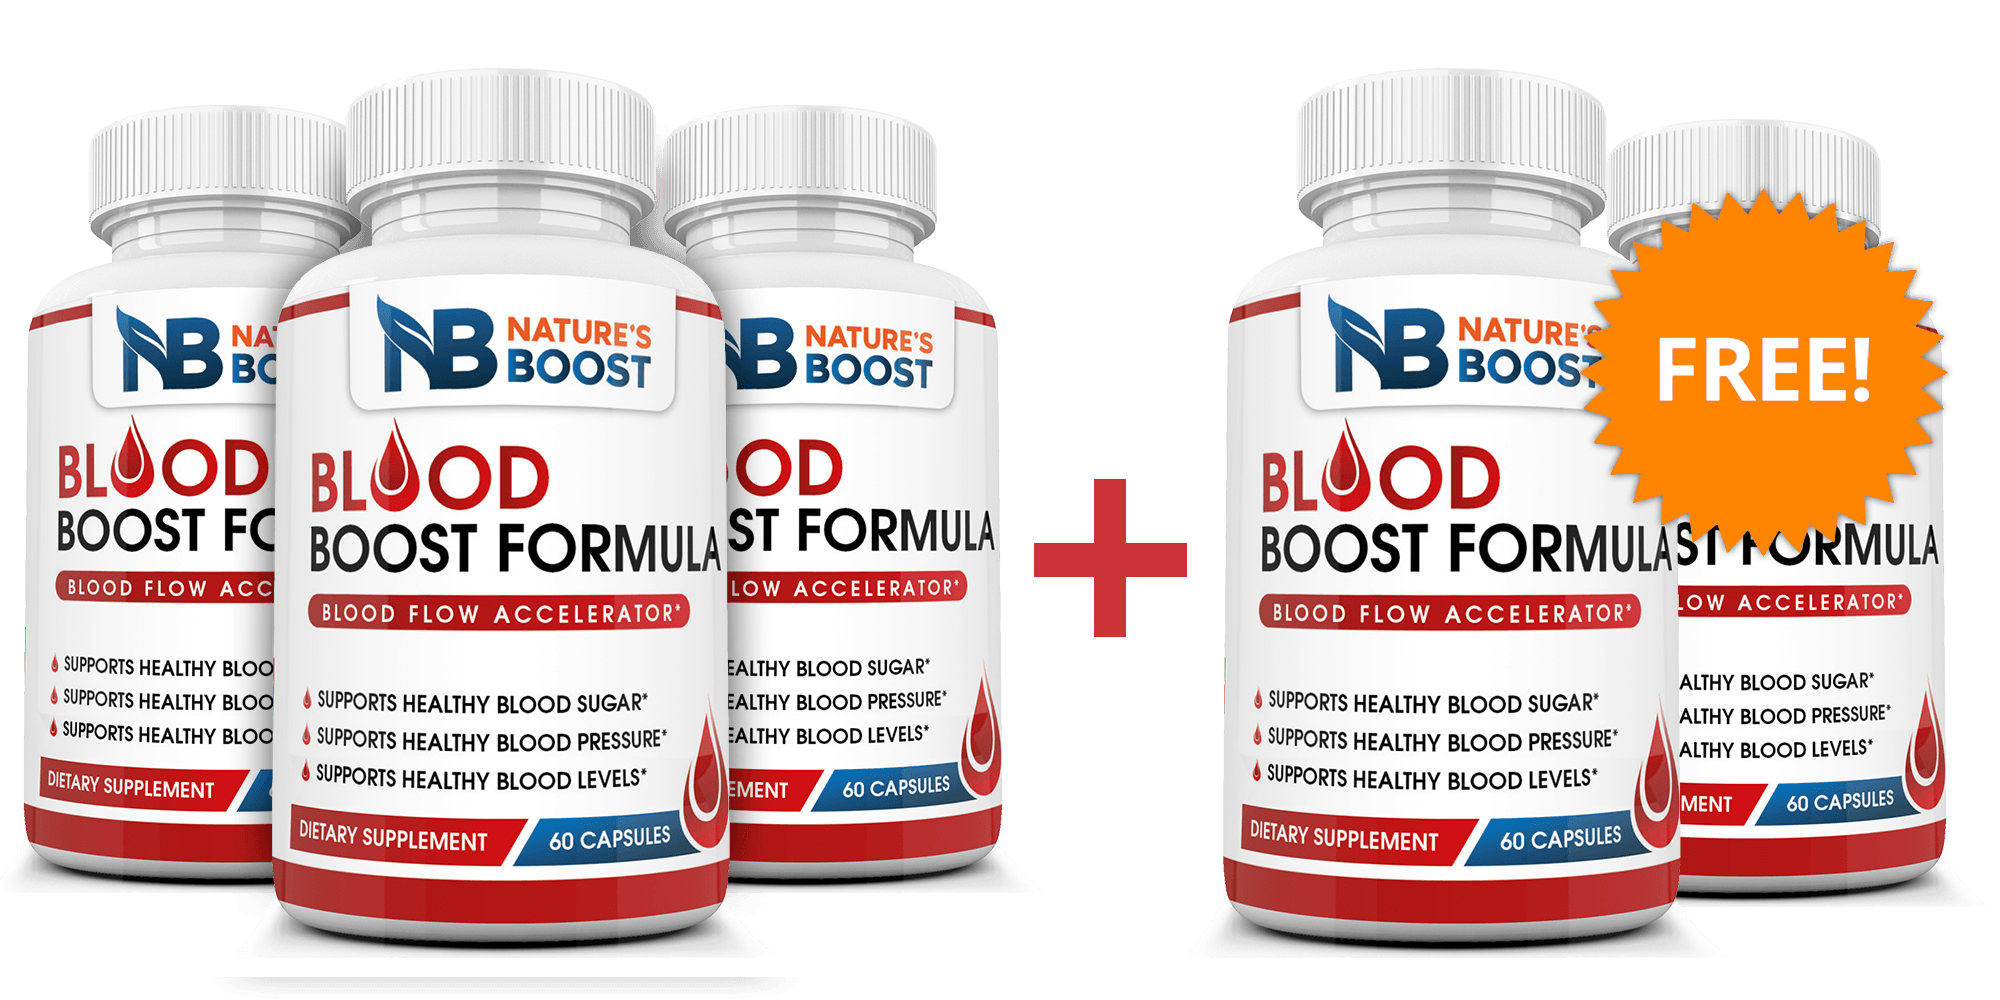 Blood Boost Formula